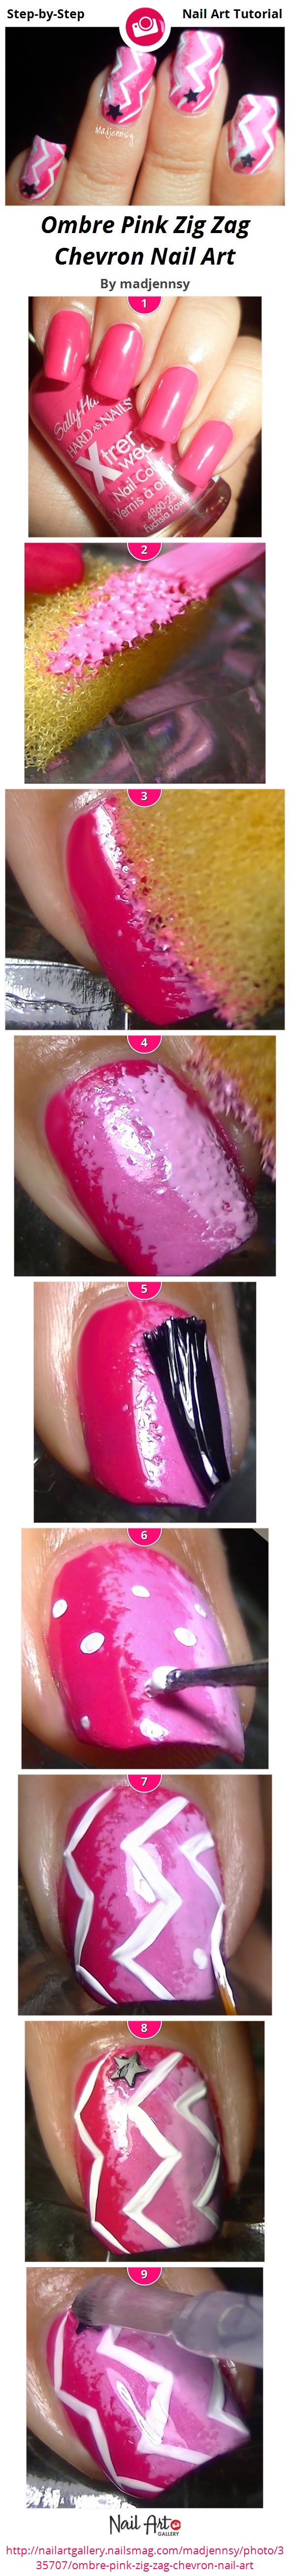 Ombre Pink Zig Zag Chevron Nail Art - Nail Art Gallery